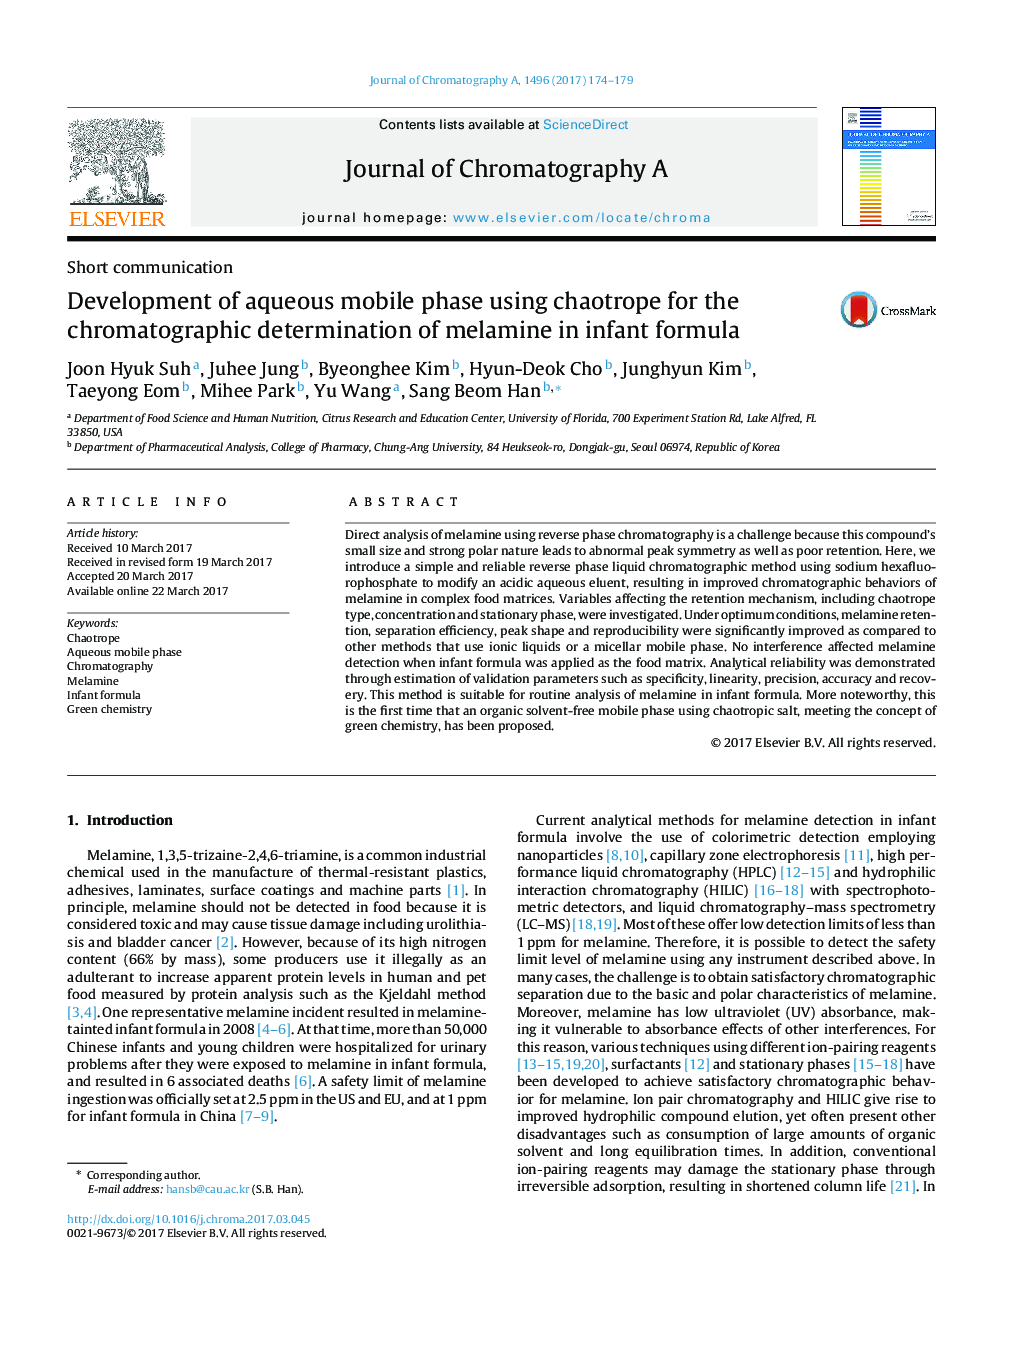 Short communicationDevelopment of aqueous mobile phase using chaotrope for the chromatographic determination of melamine in infant formula